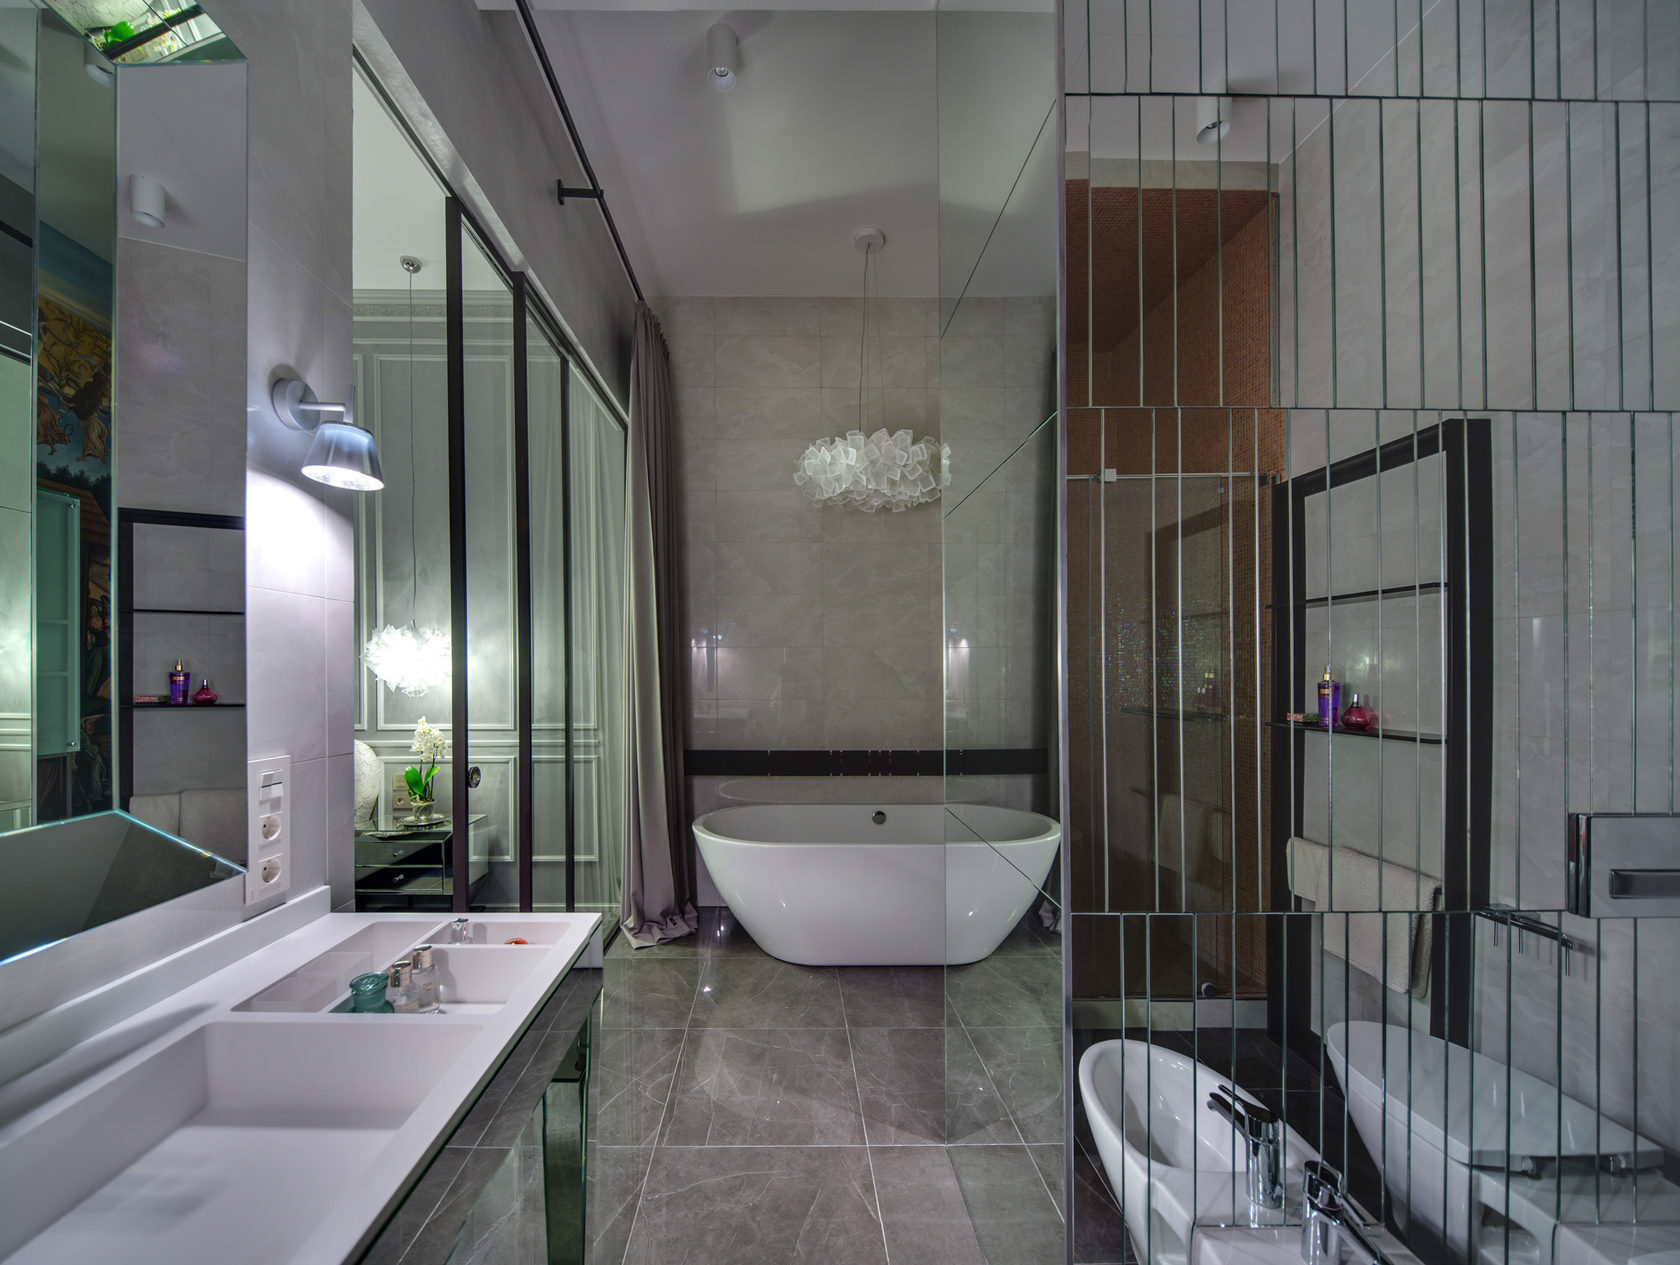 Blossom Apartment Interior Design Kiev, Ukraine - Nika Vorotyntseva